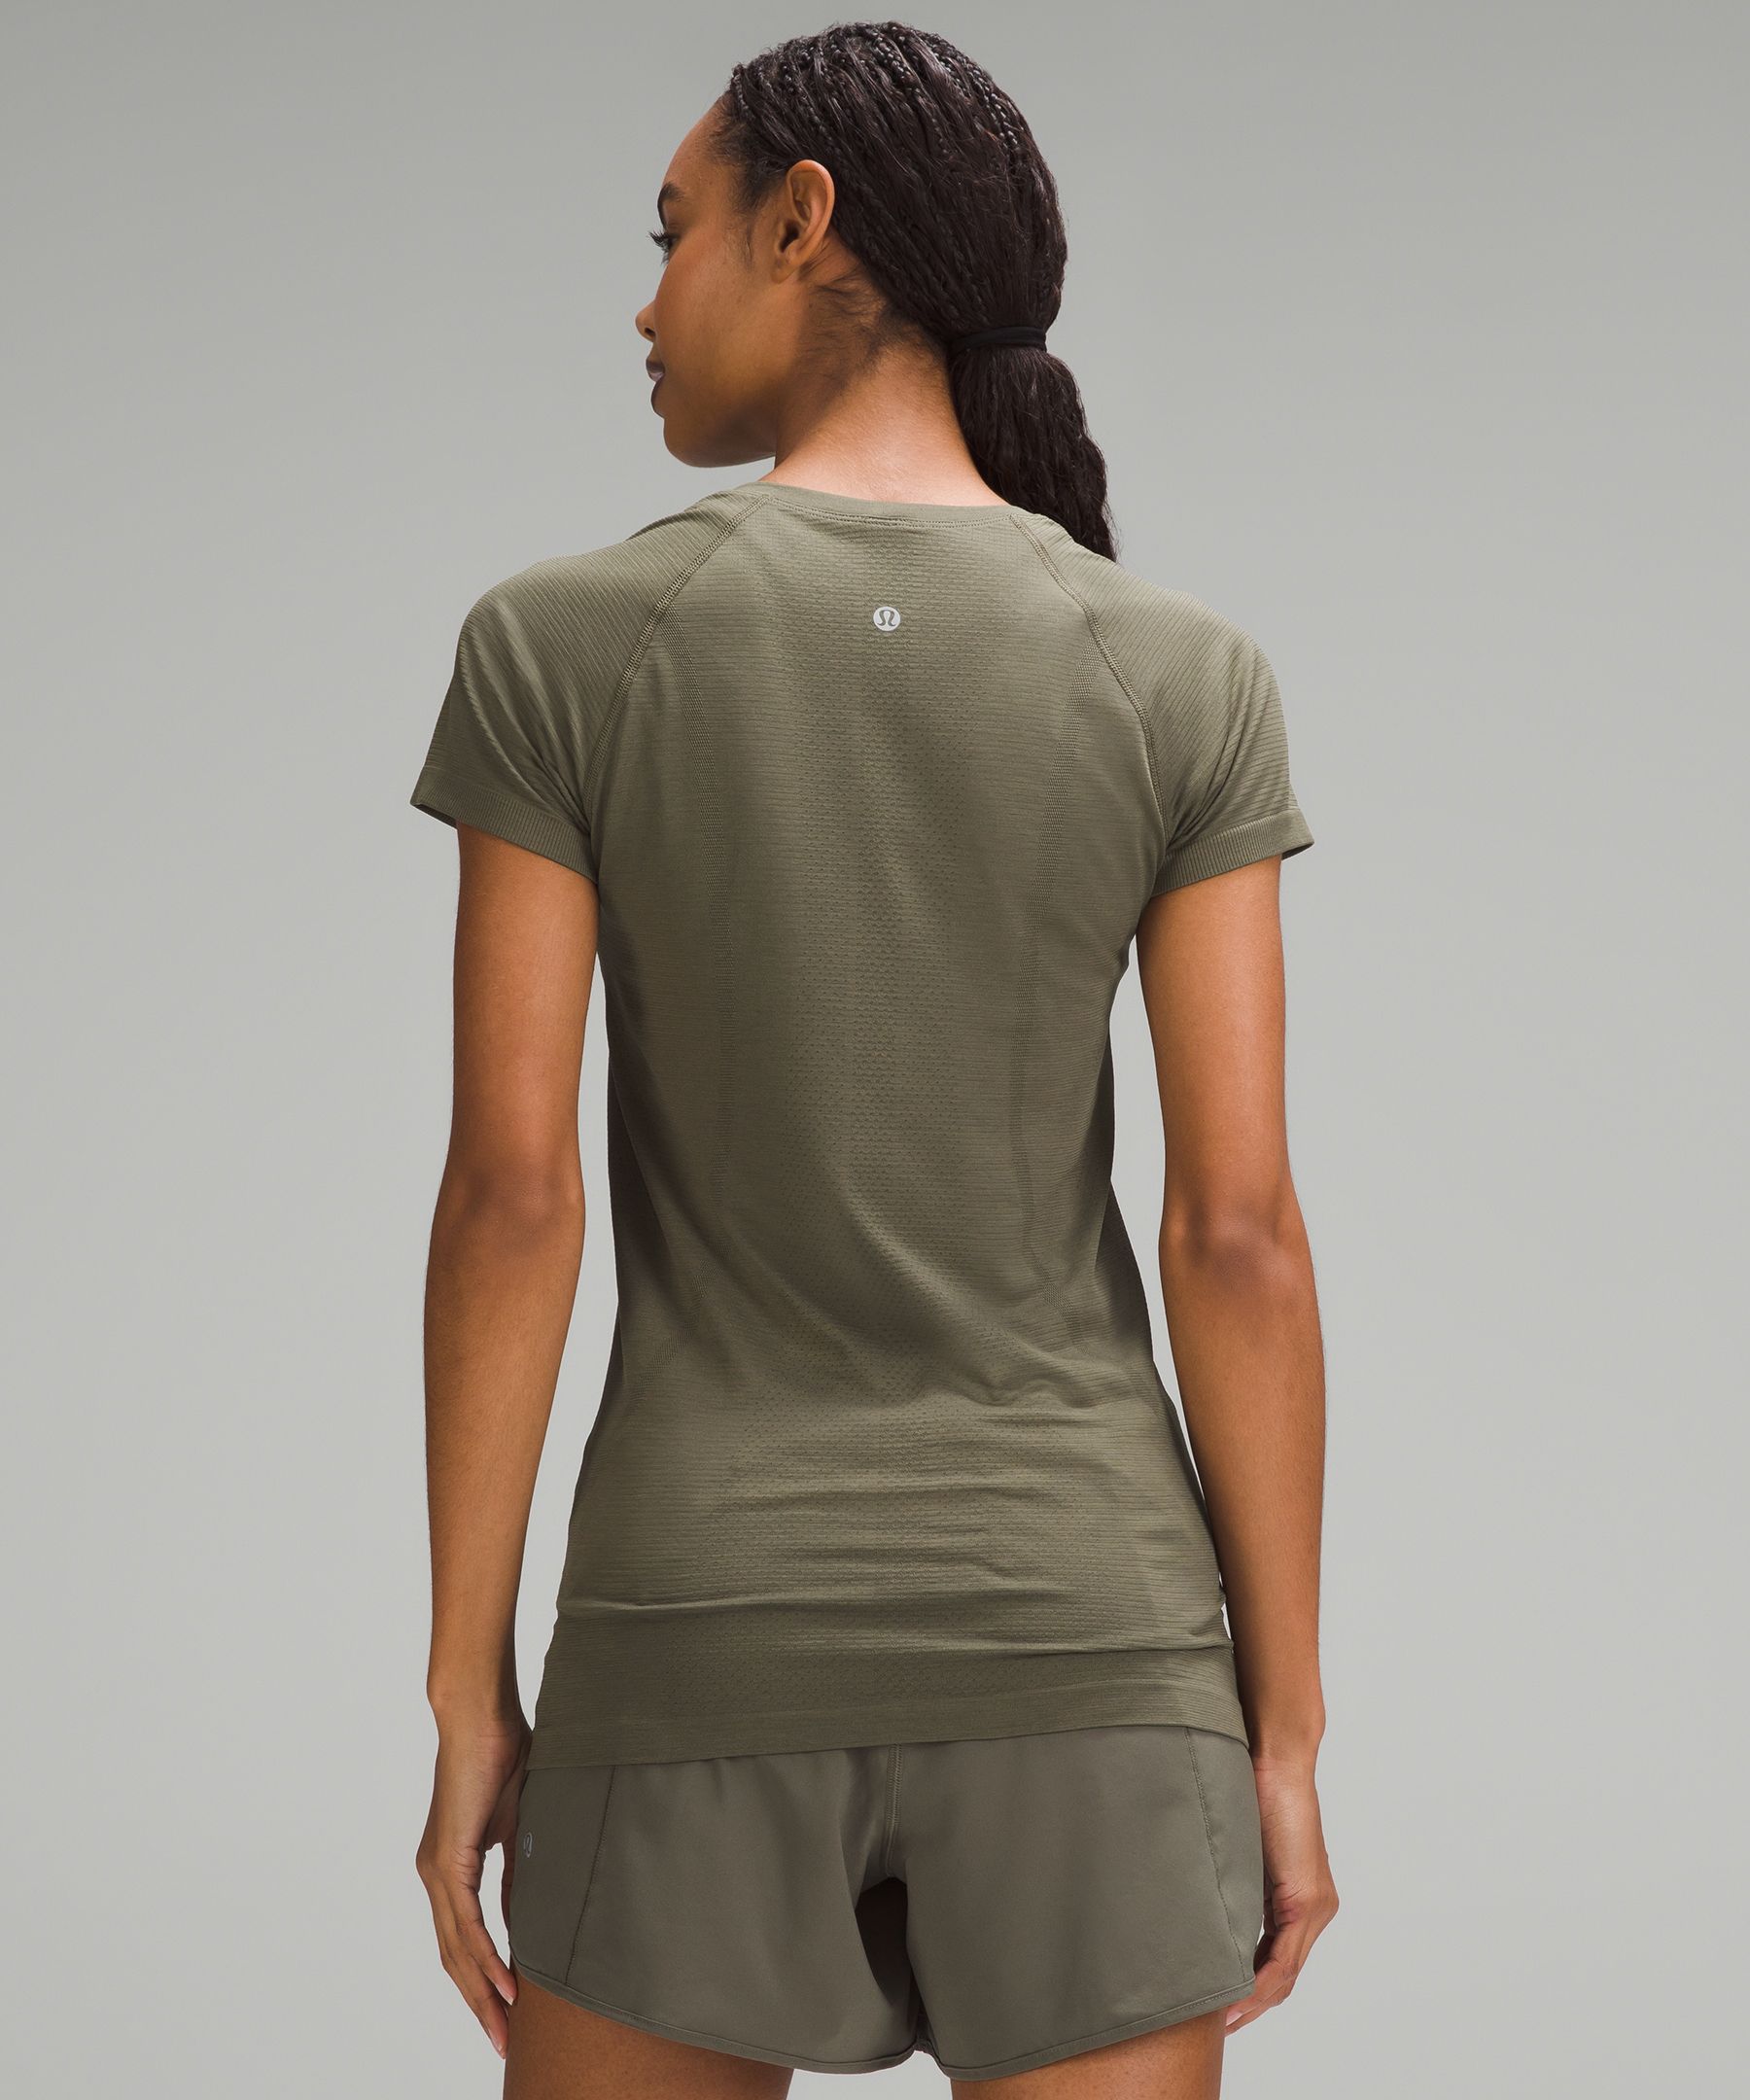 lululemon - Swiftly Tech Short Sleeve 2.0 Grey on Designer Wardrobe